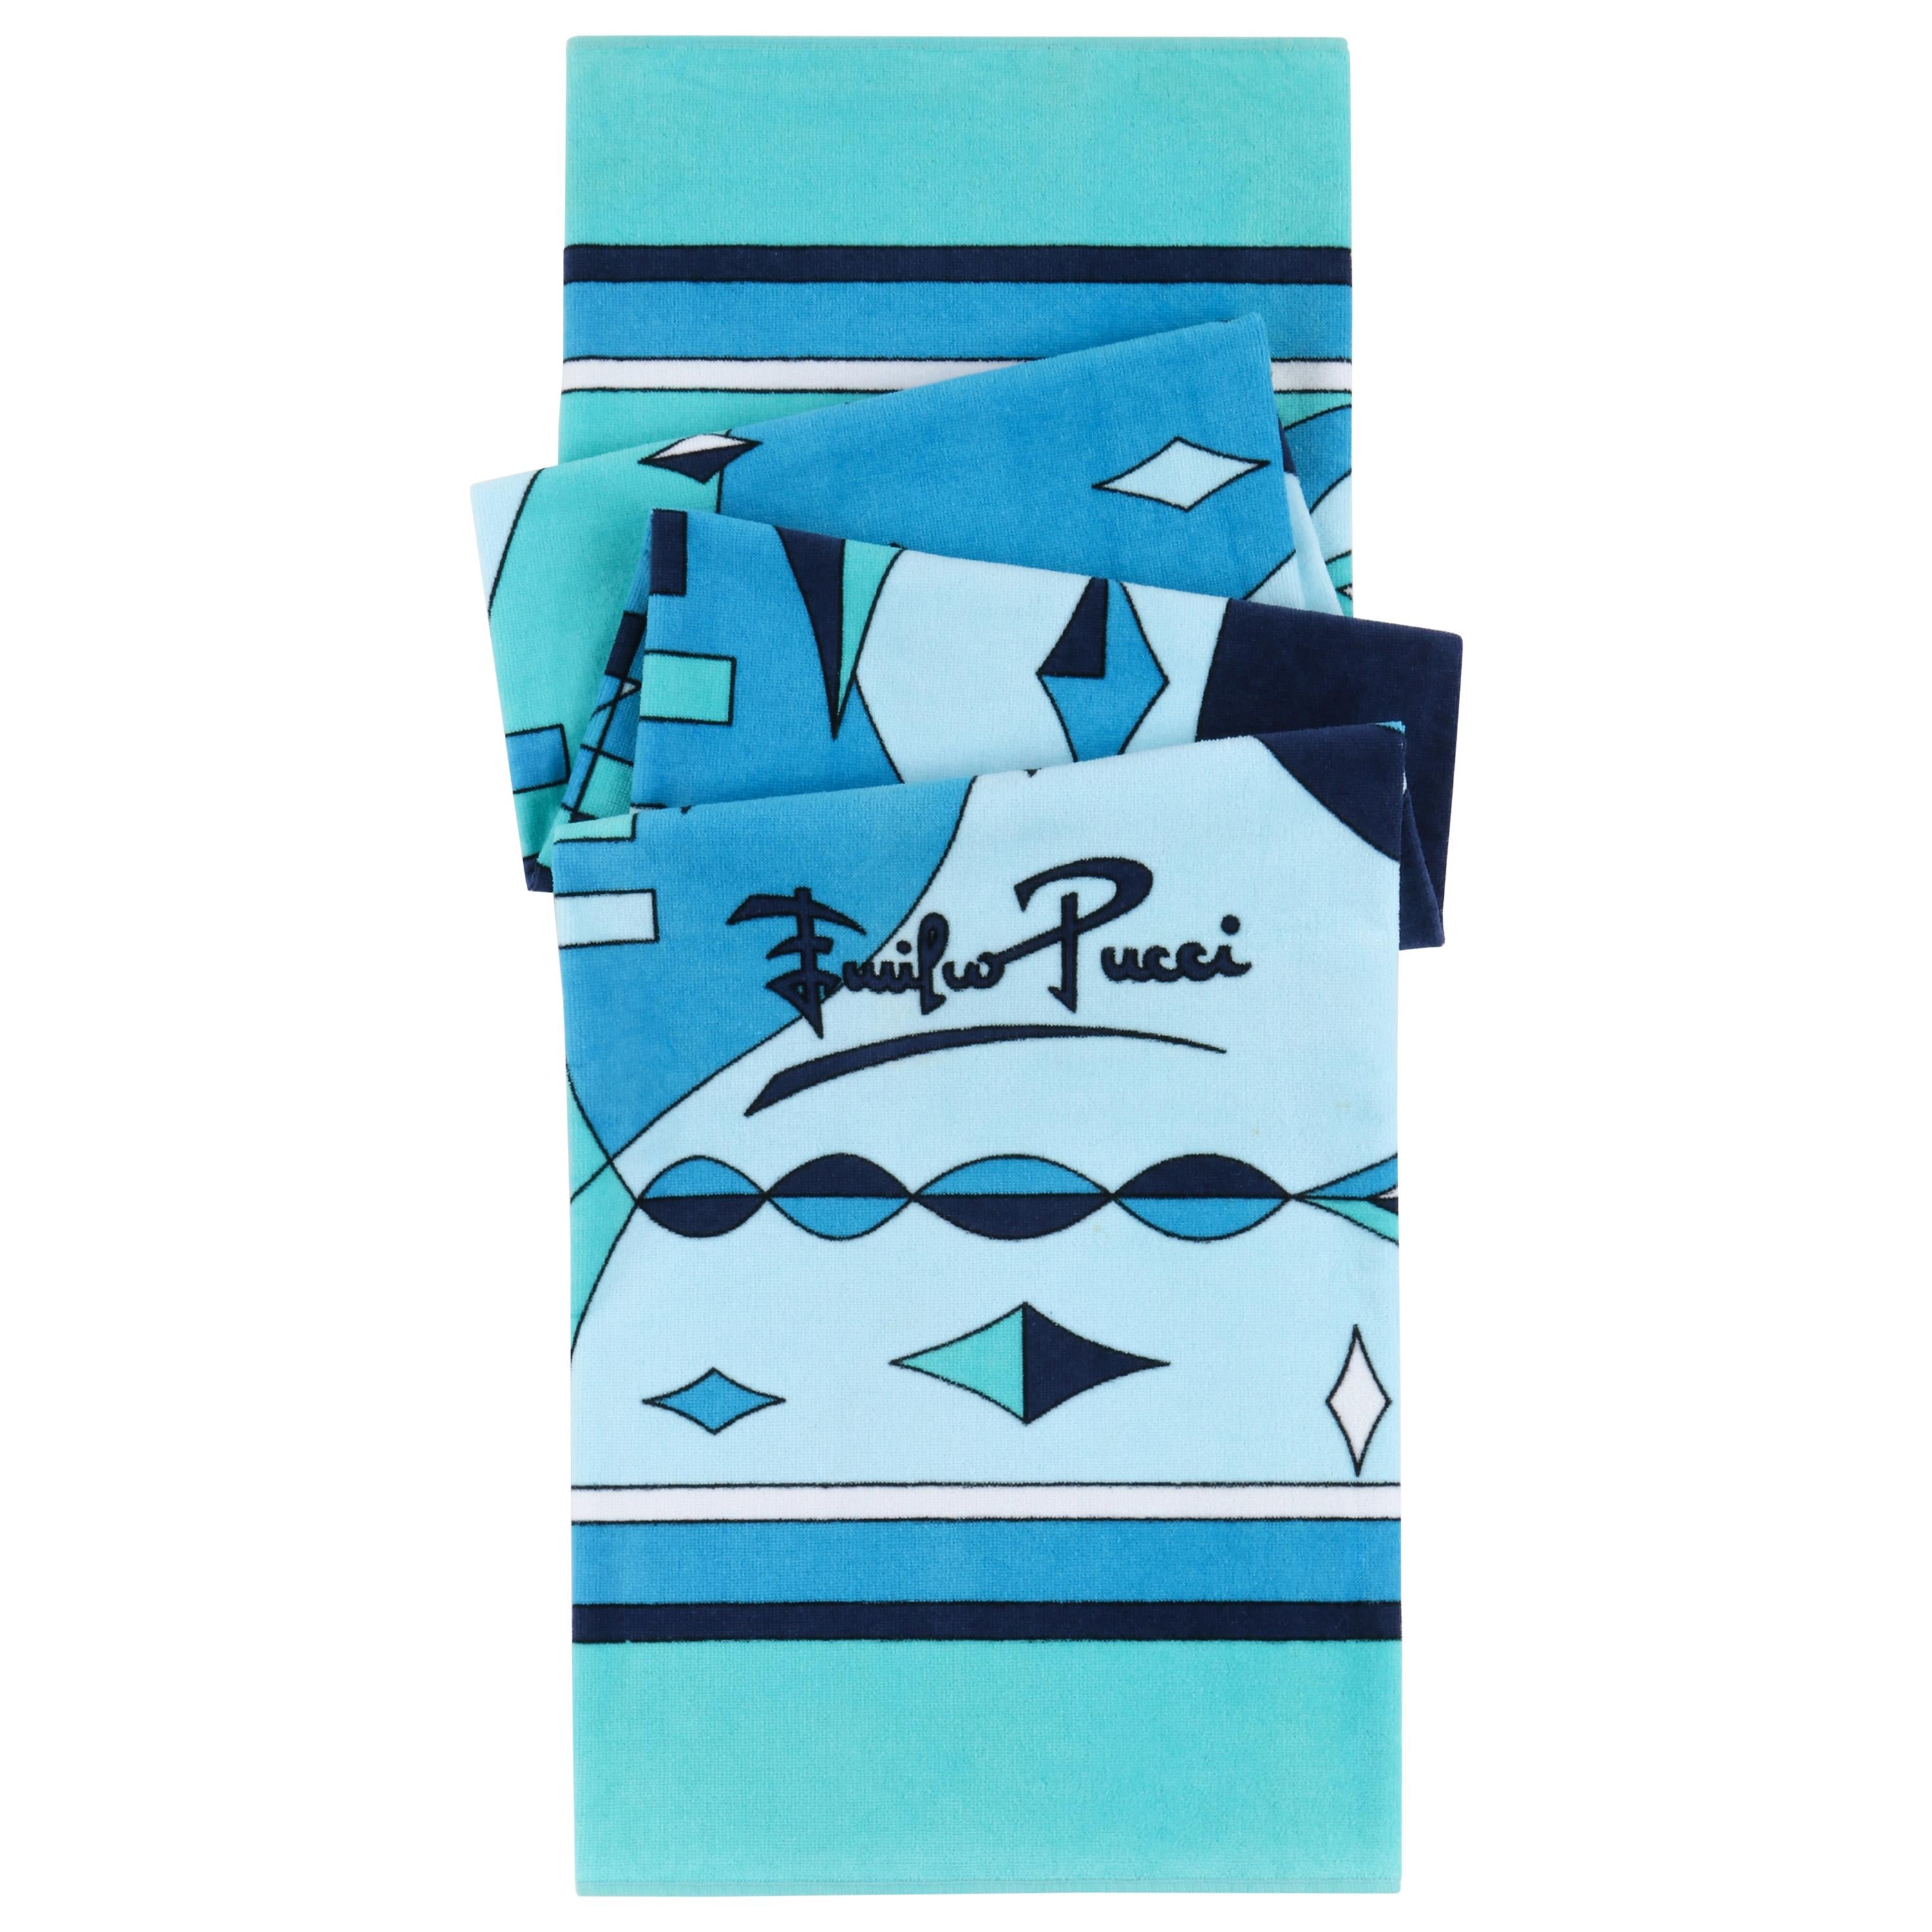 EMILIO PUCCI c.1970’s Aqua Blue Abstract Signature Diamond Print Beach Towel Vtg